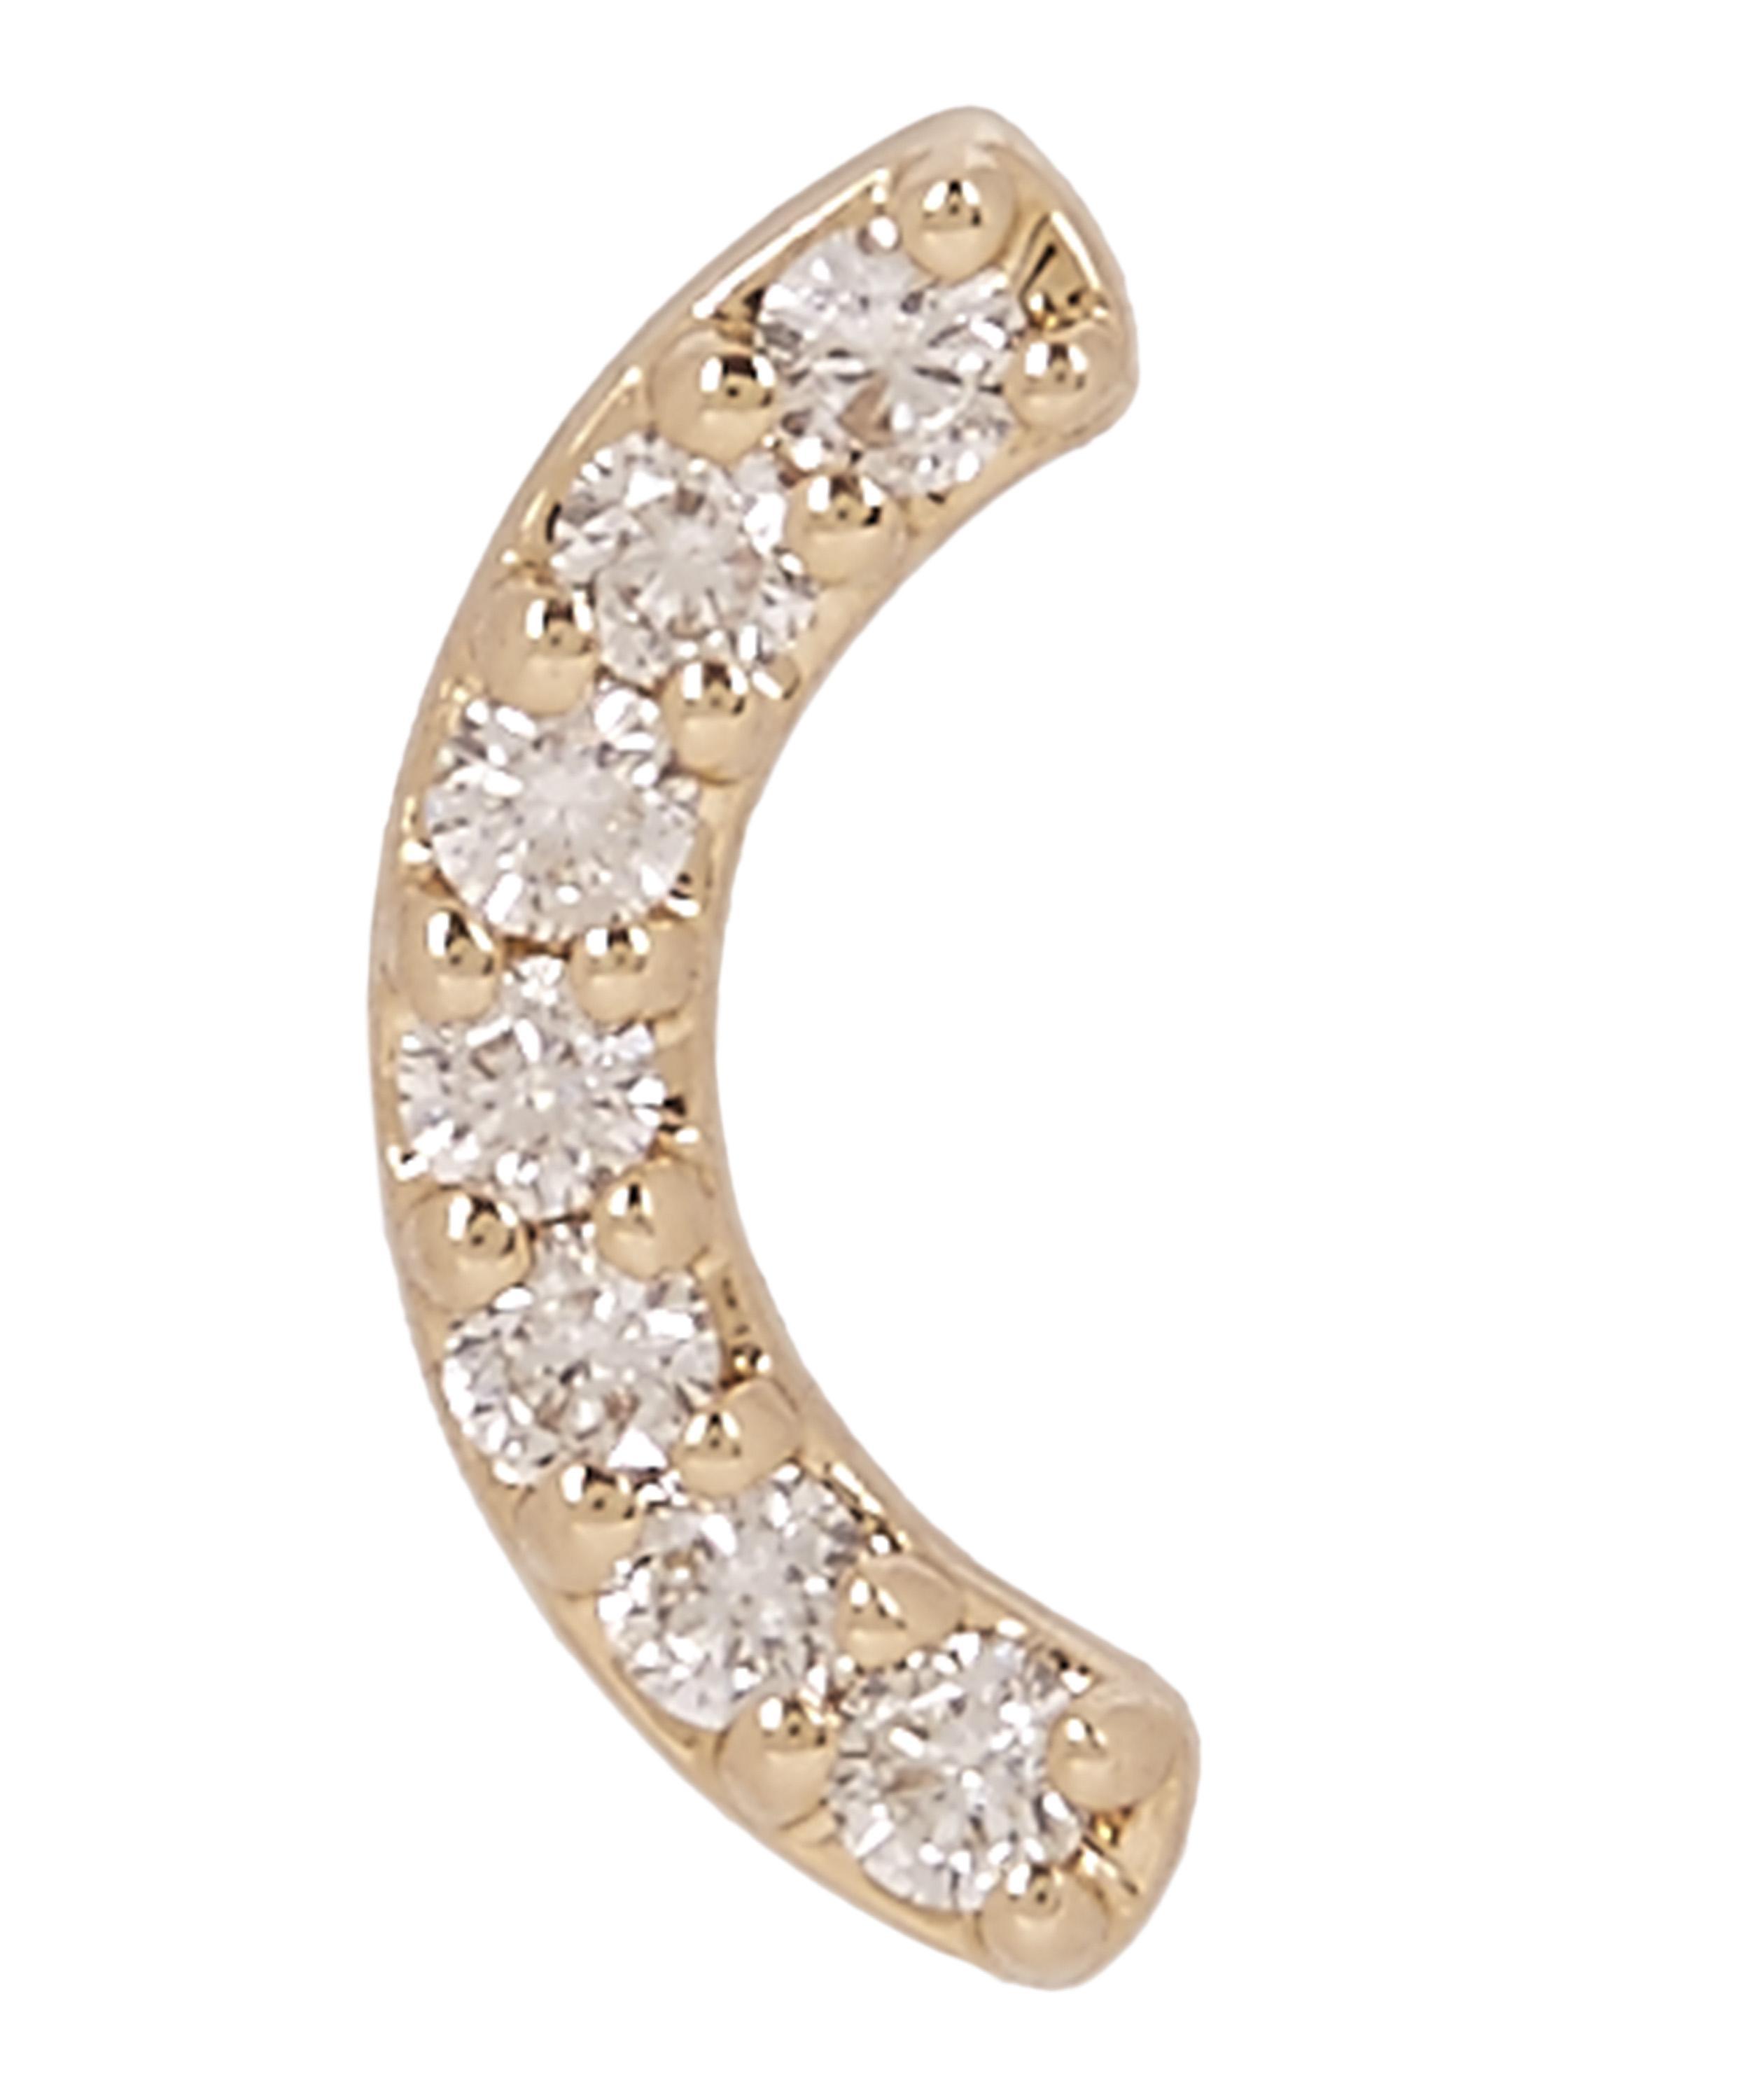 Lyst - Andrea Fohrman Gold Diamond Rainbow Stud Earring in Metallic